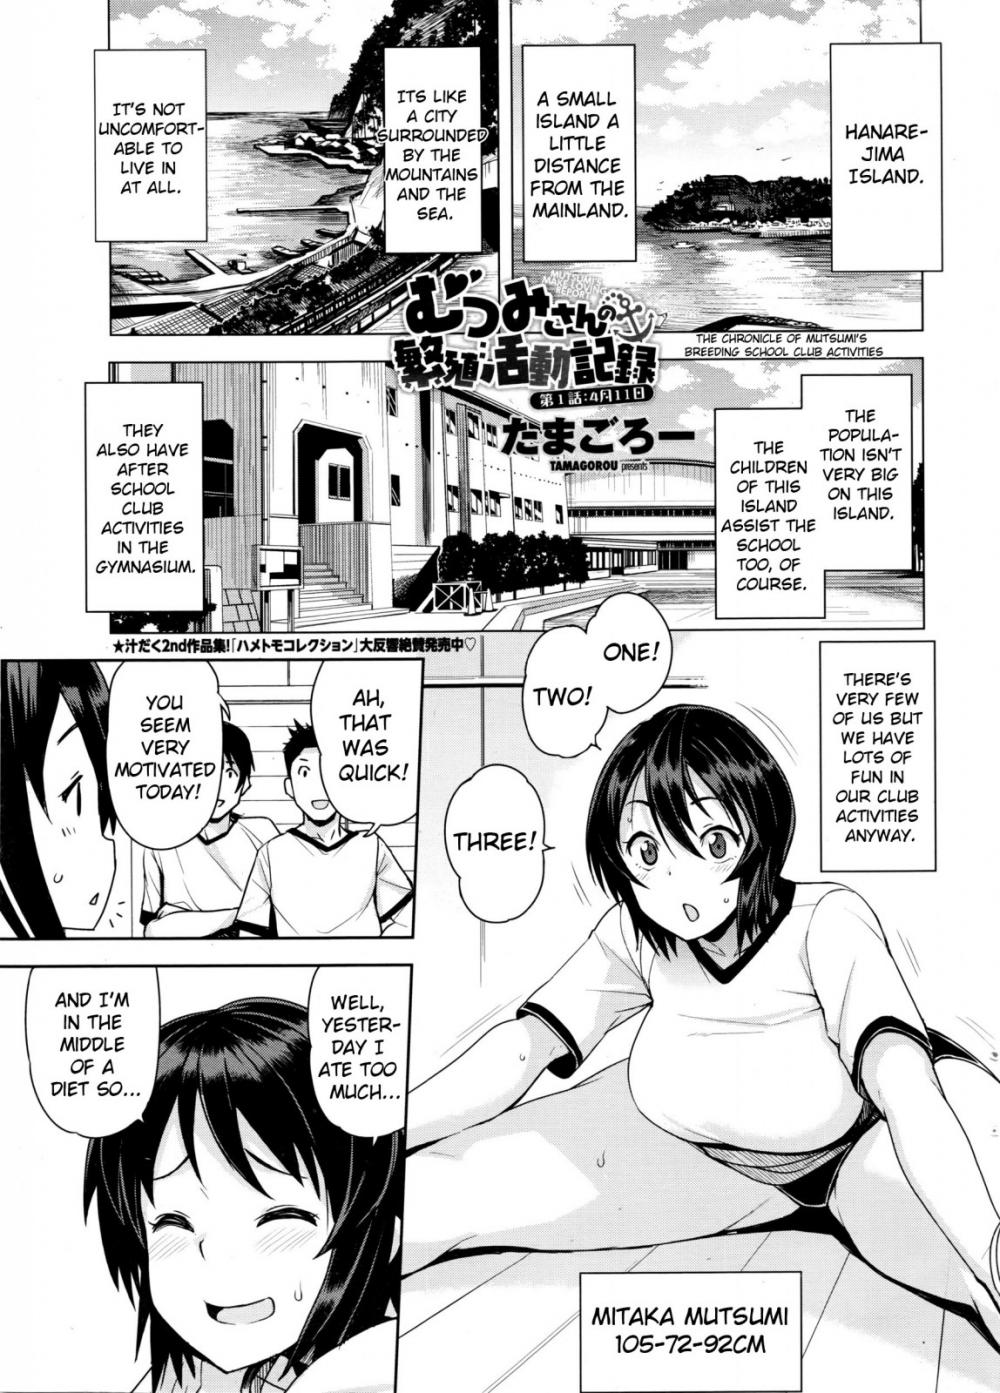 Hentai Manga Comic-The Chronicle of Mutsumi's Breeding School Club Activities-Read-1